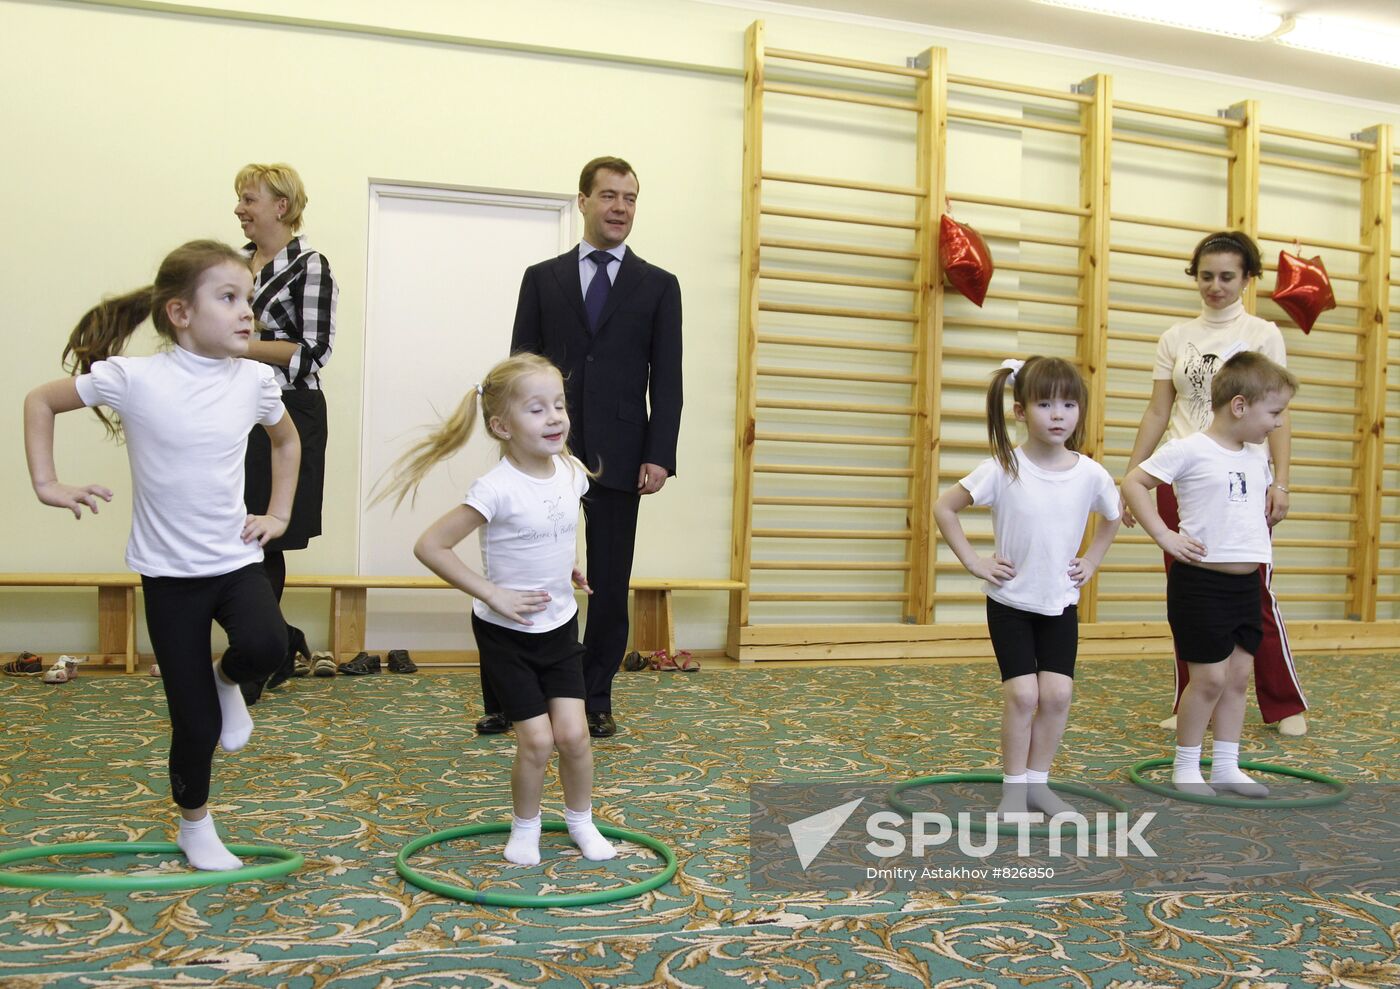 Dmitry Medvedev visits Moscow kindergarten